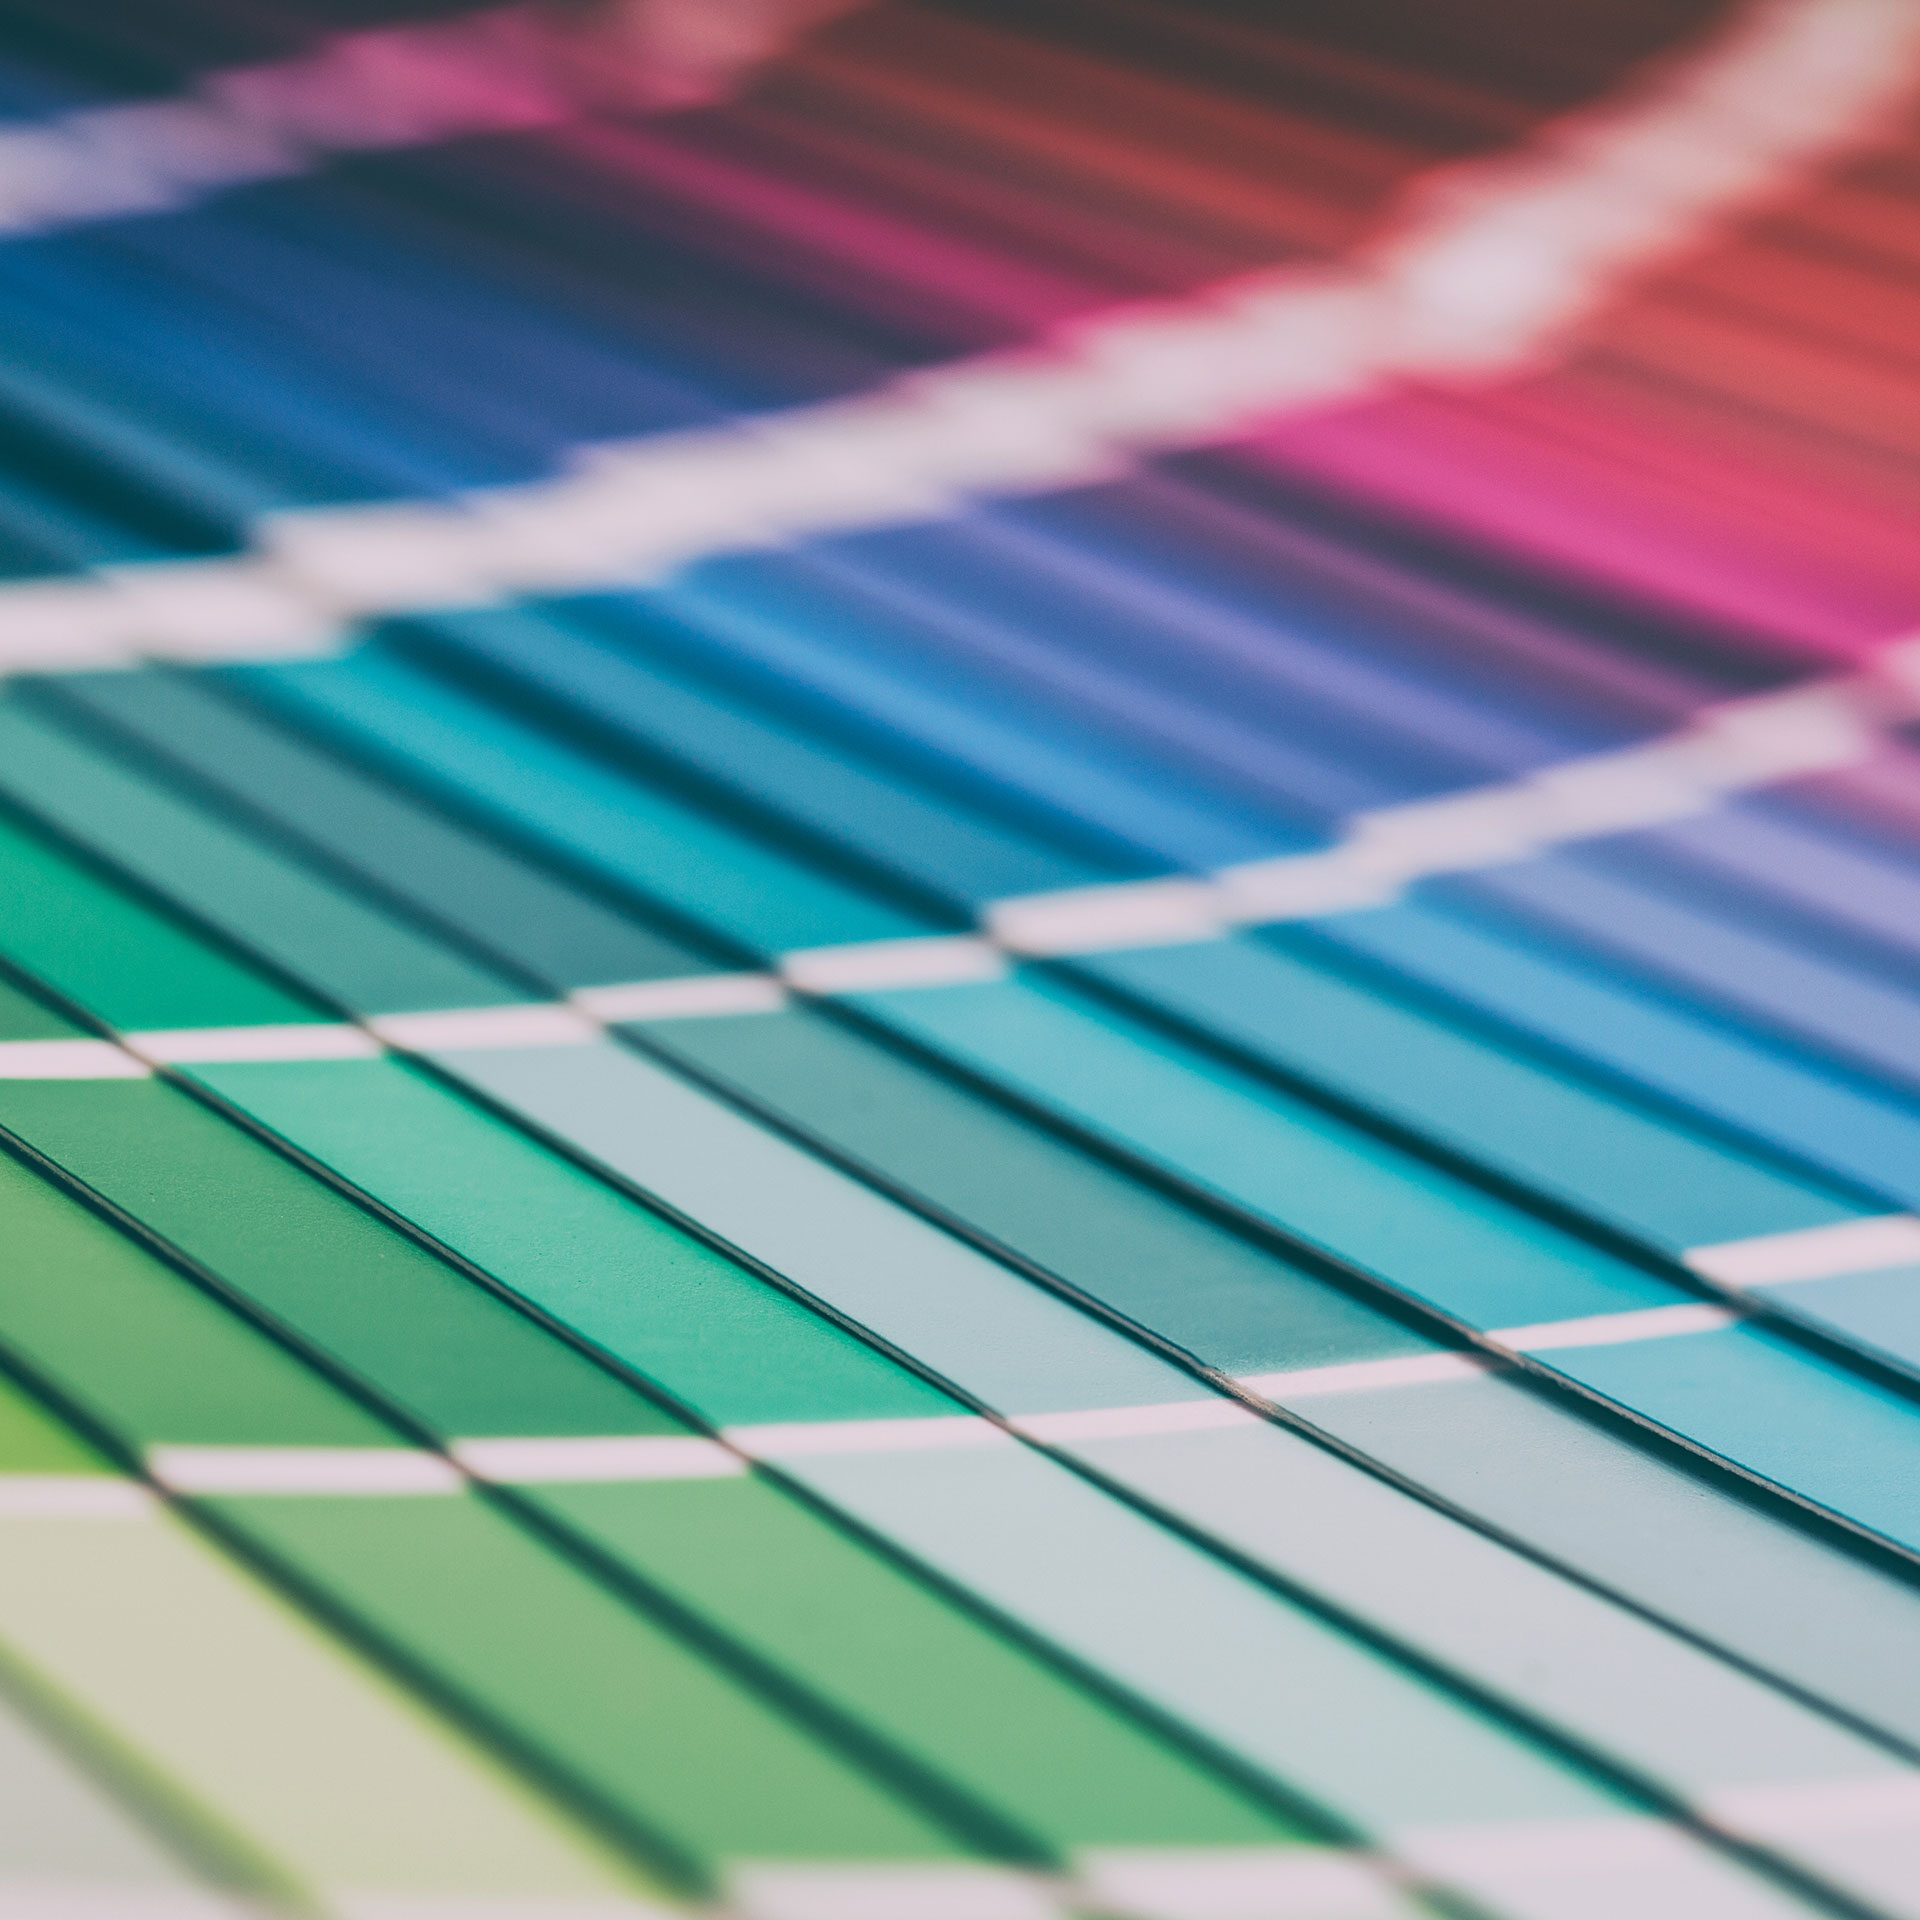 Open Pantone sample colors catalogue for color calibration